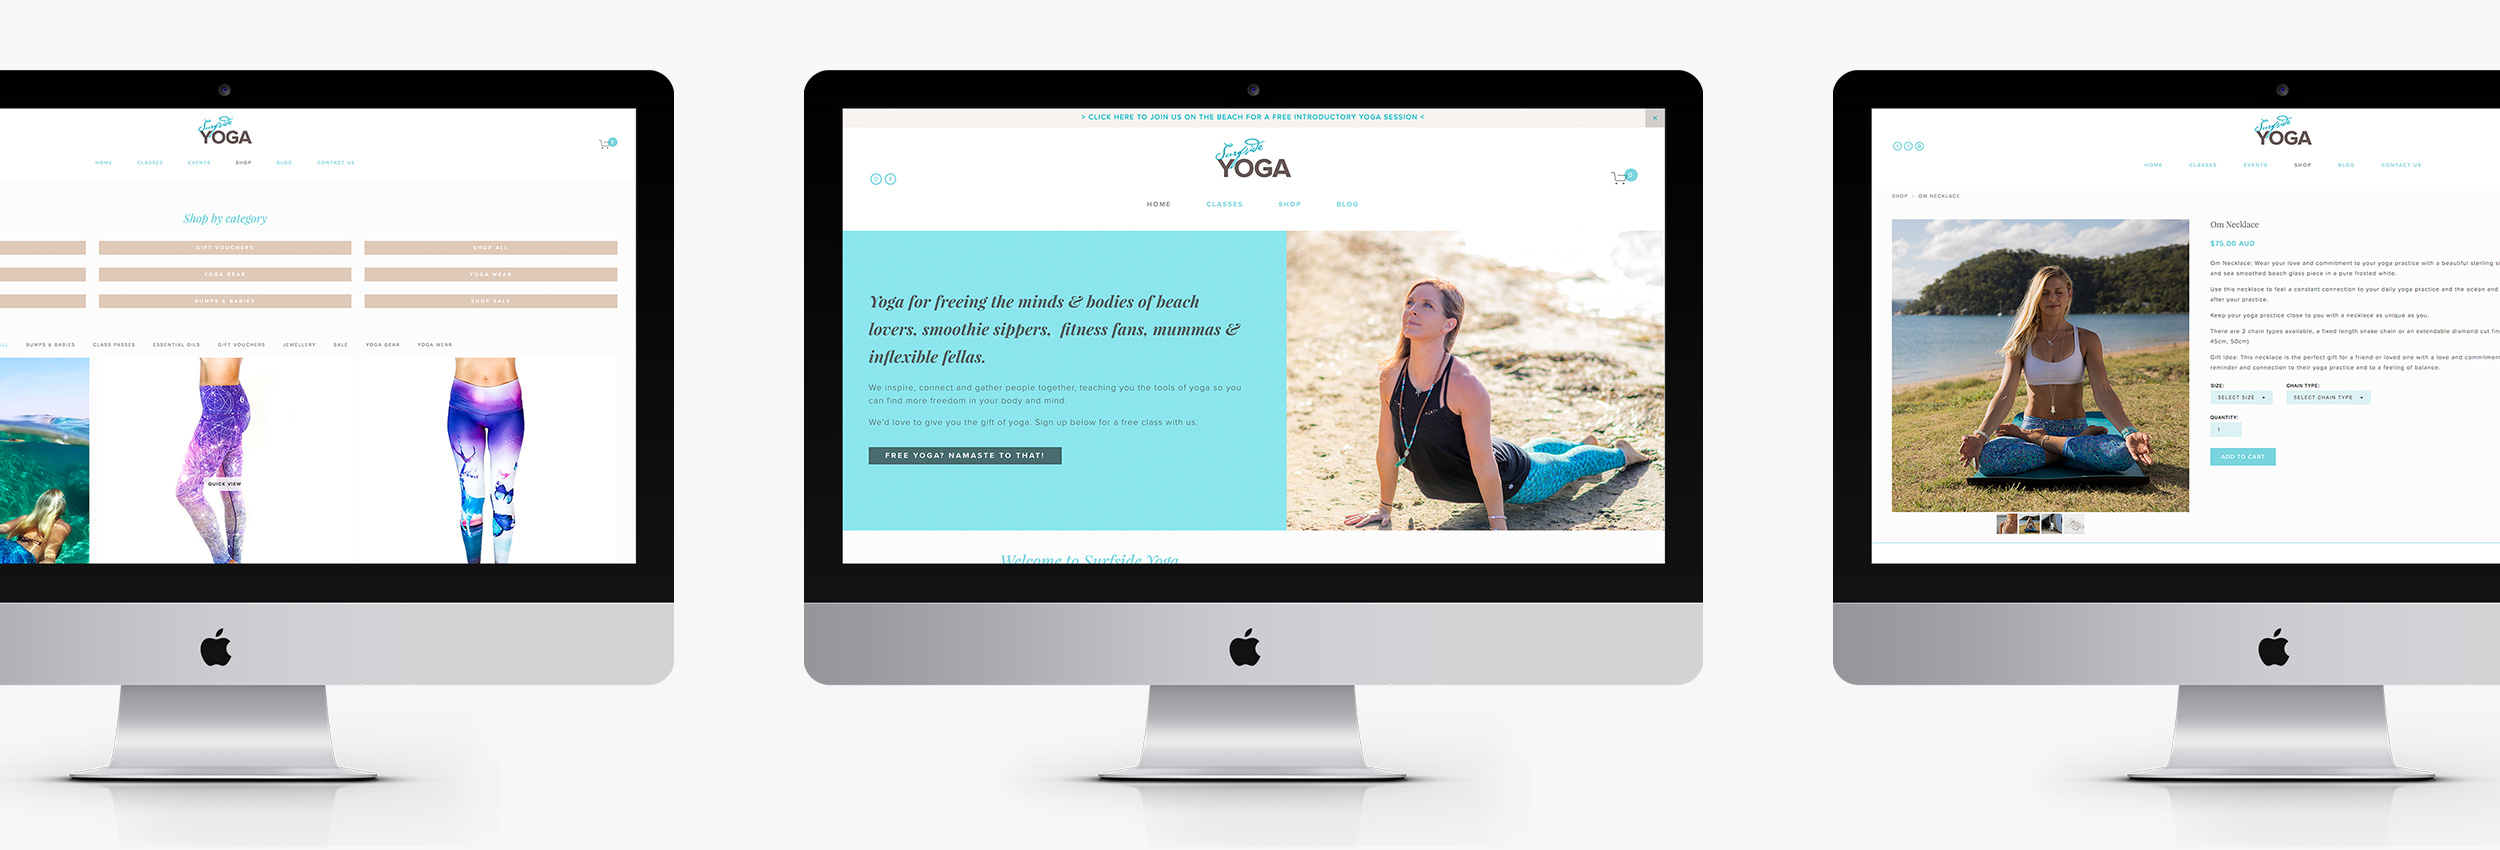 Surfside-Yoga-3-Macs.jpg